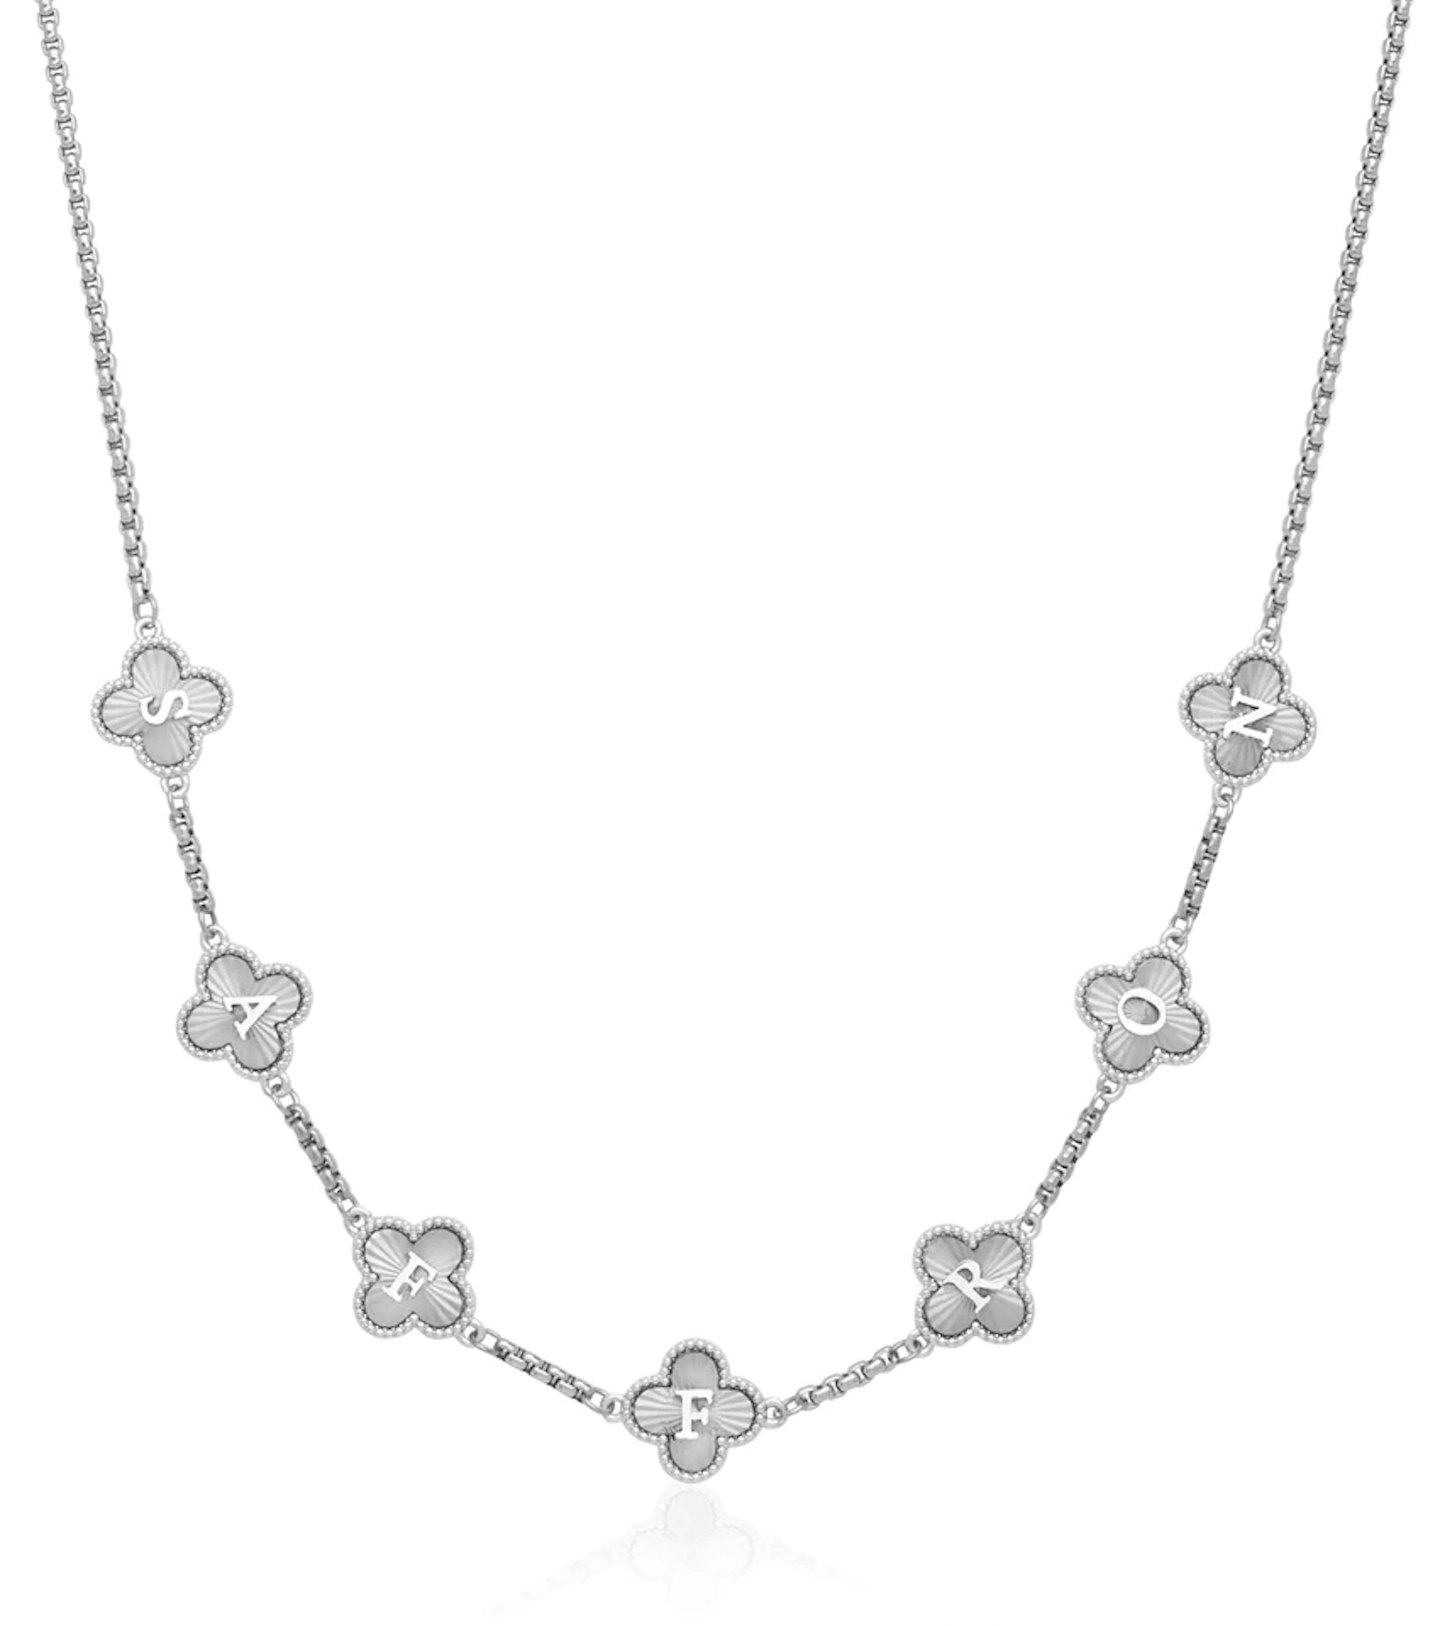 abbott lyon clover necklace 